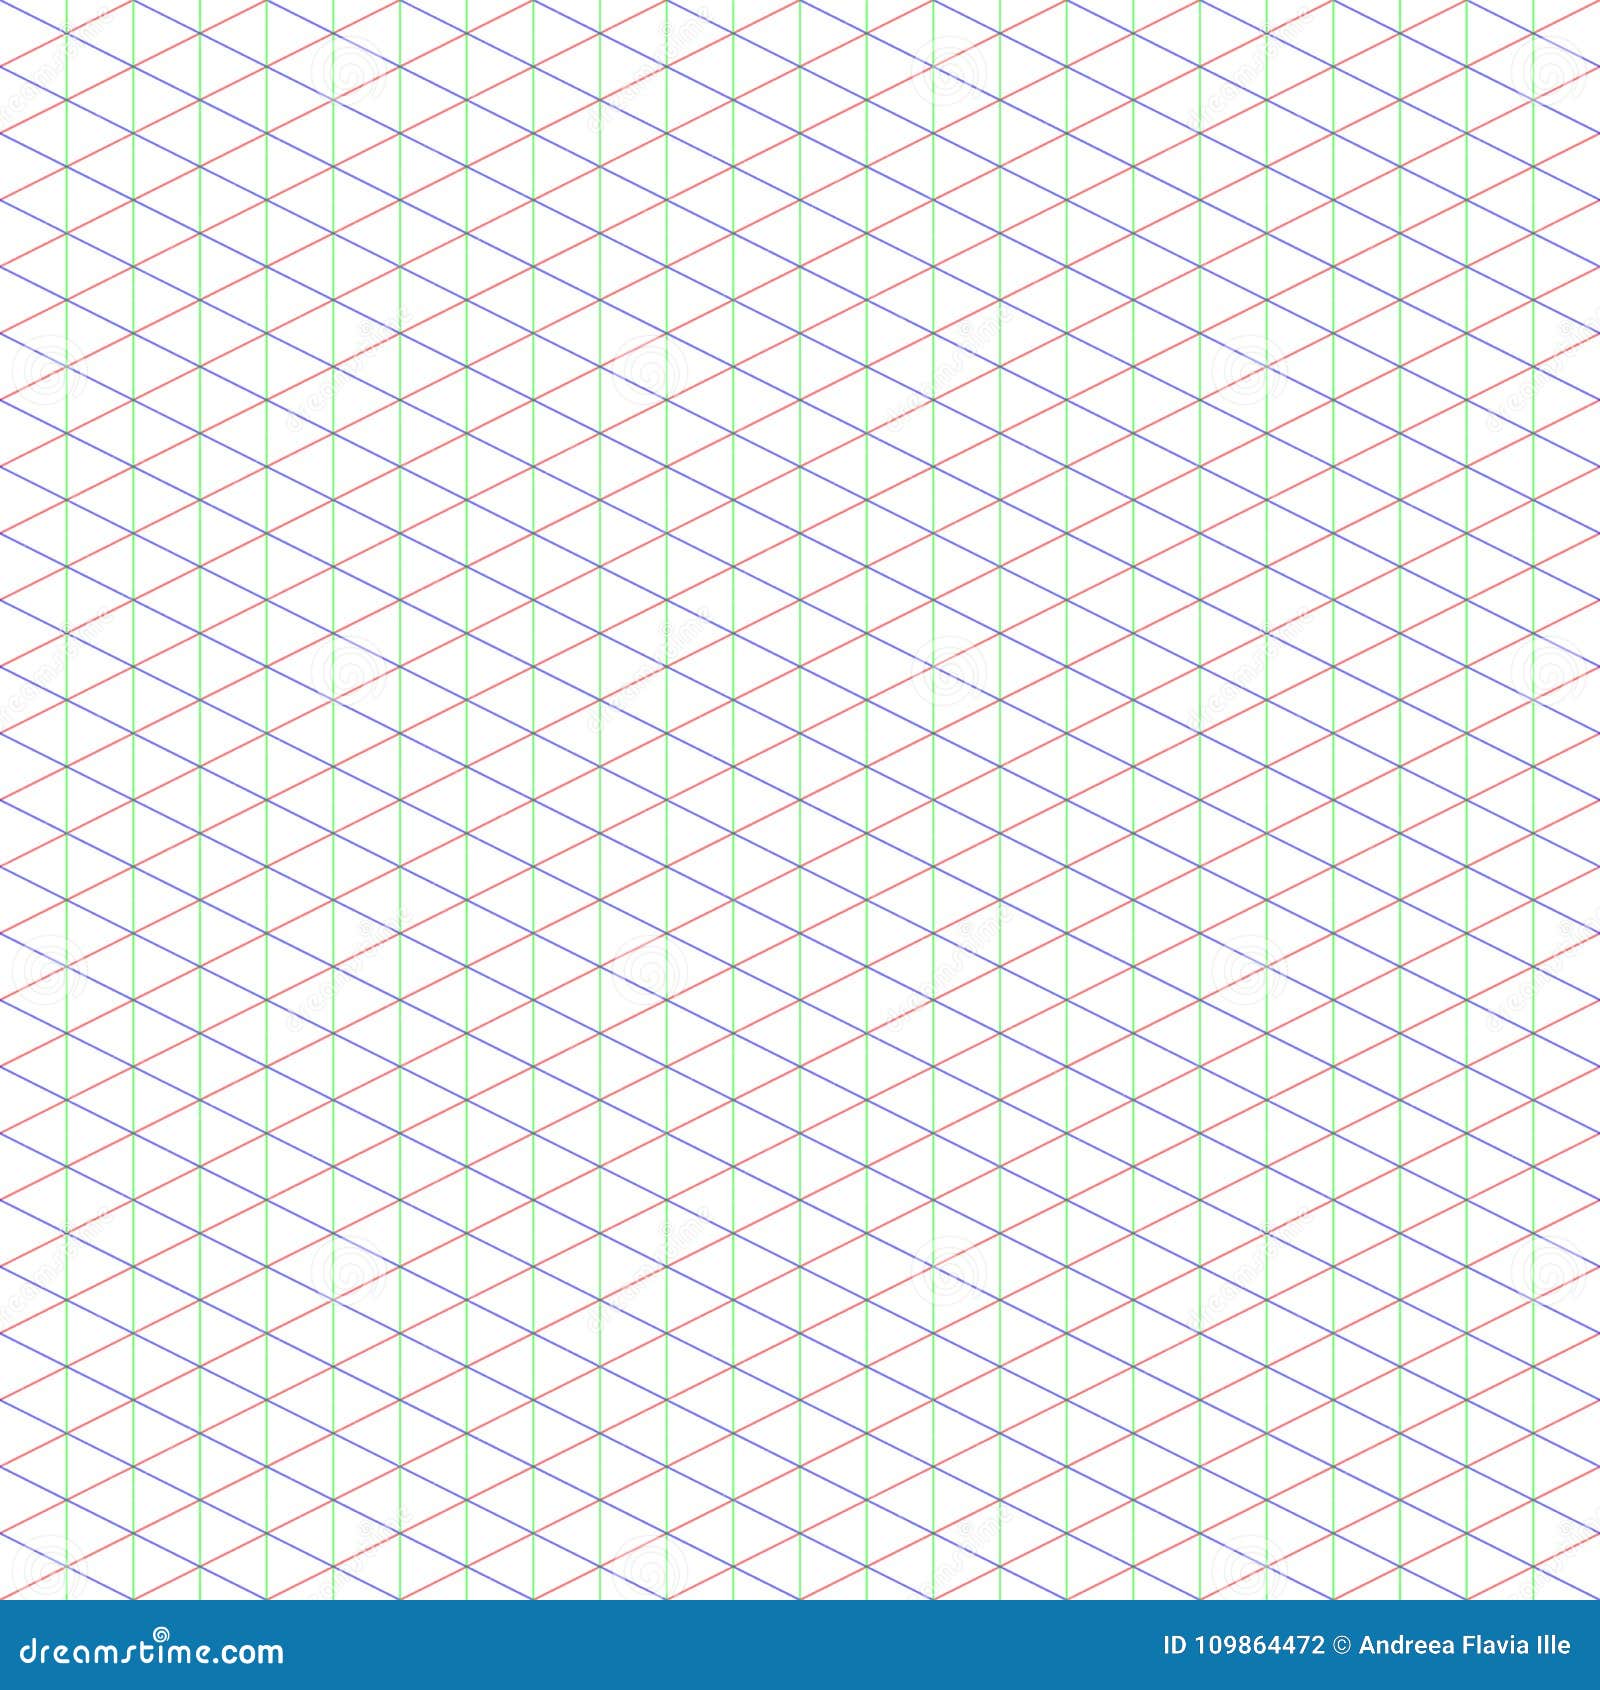 Pixel Art Grid Large - Pixel Art Grid Gallery